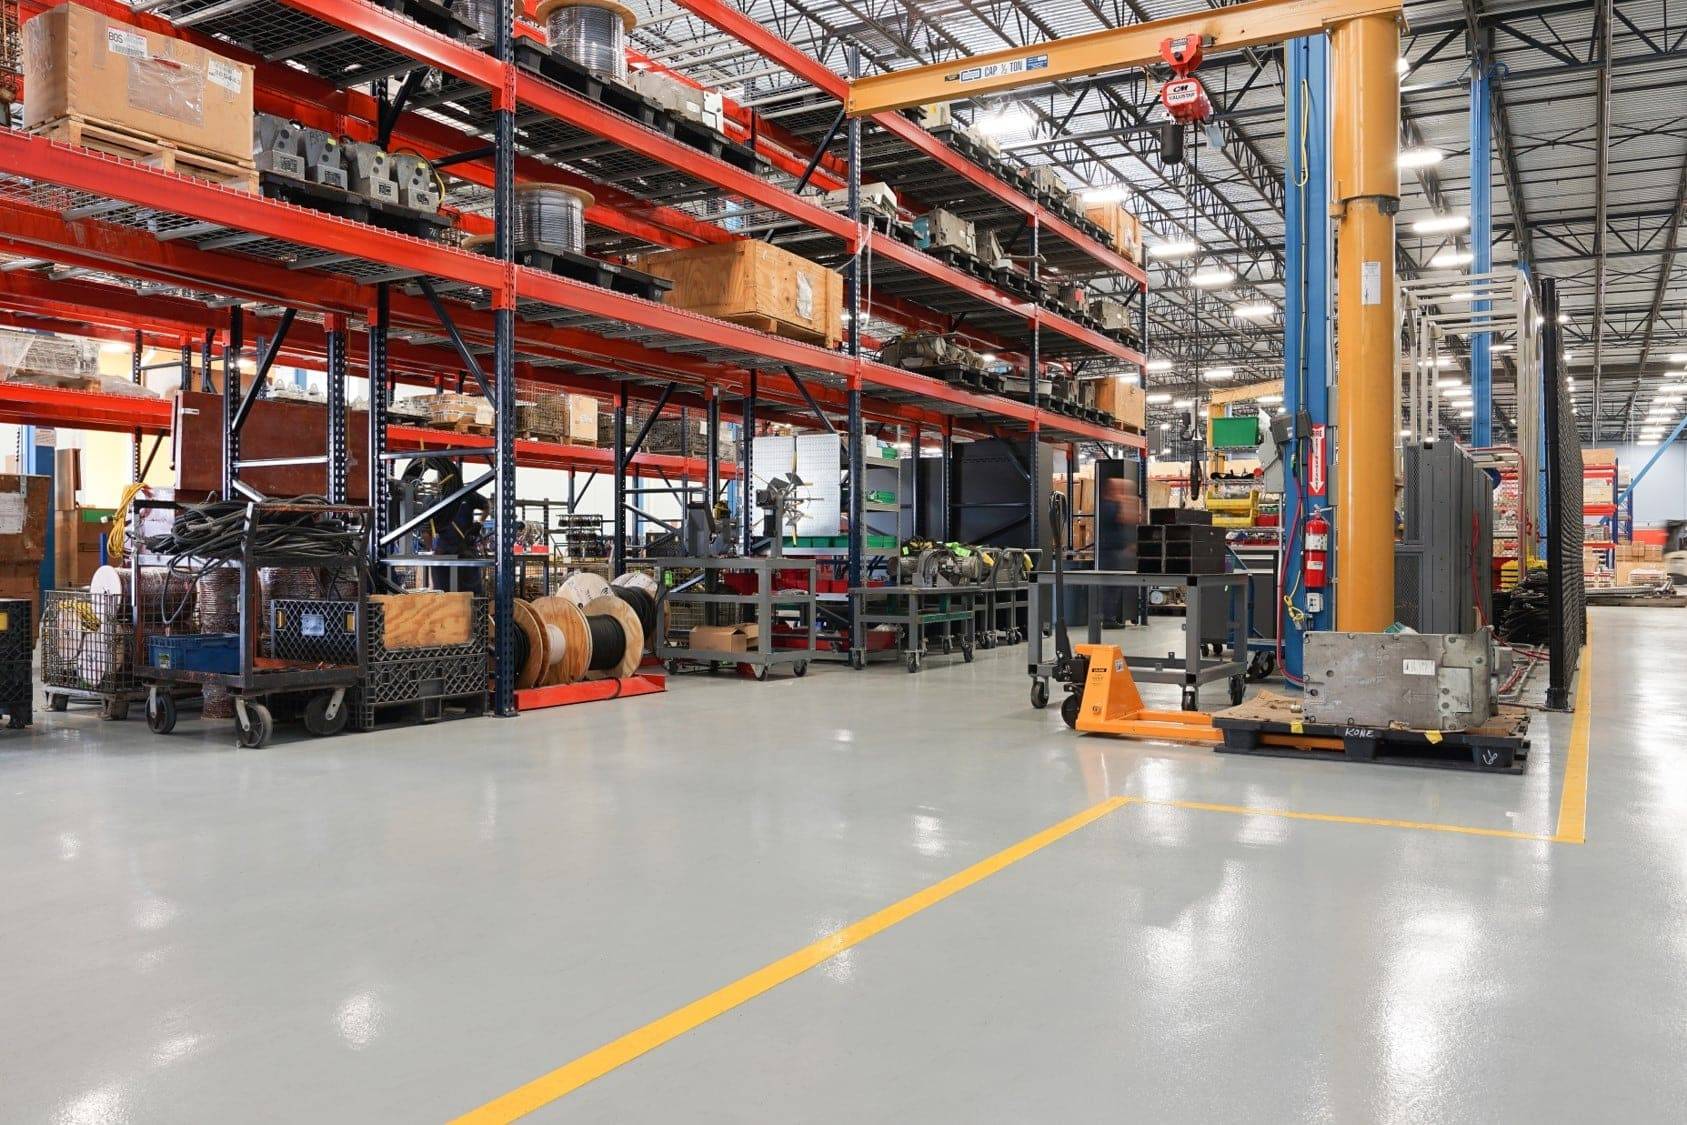 Resinous flooring and shelving inside industrial warehouse